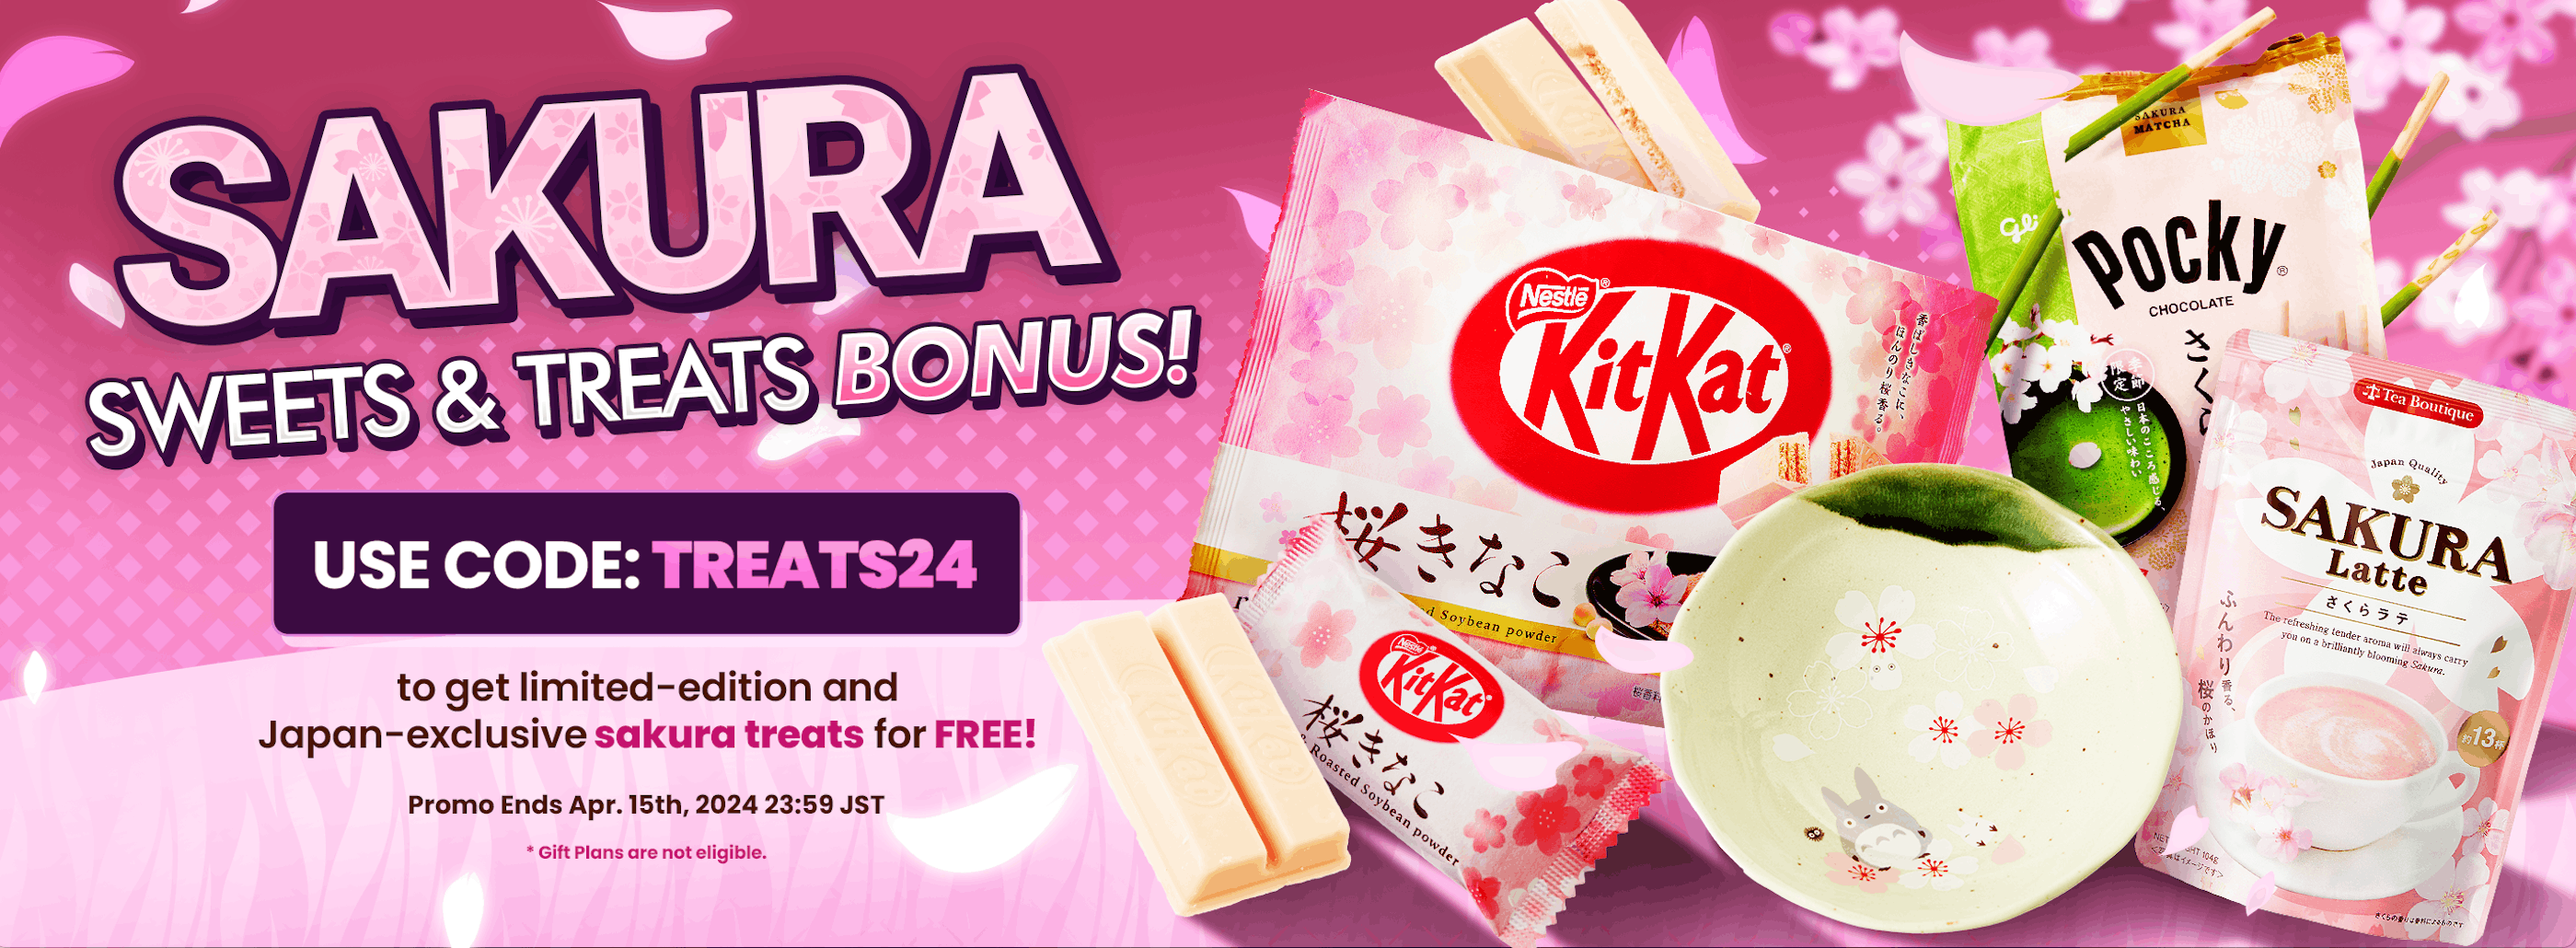 TokyoTreat's Sakura Sweets & Treats Bonus promotion with featured Japan-exclusive items.